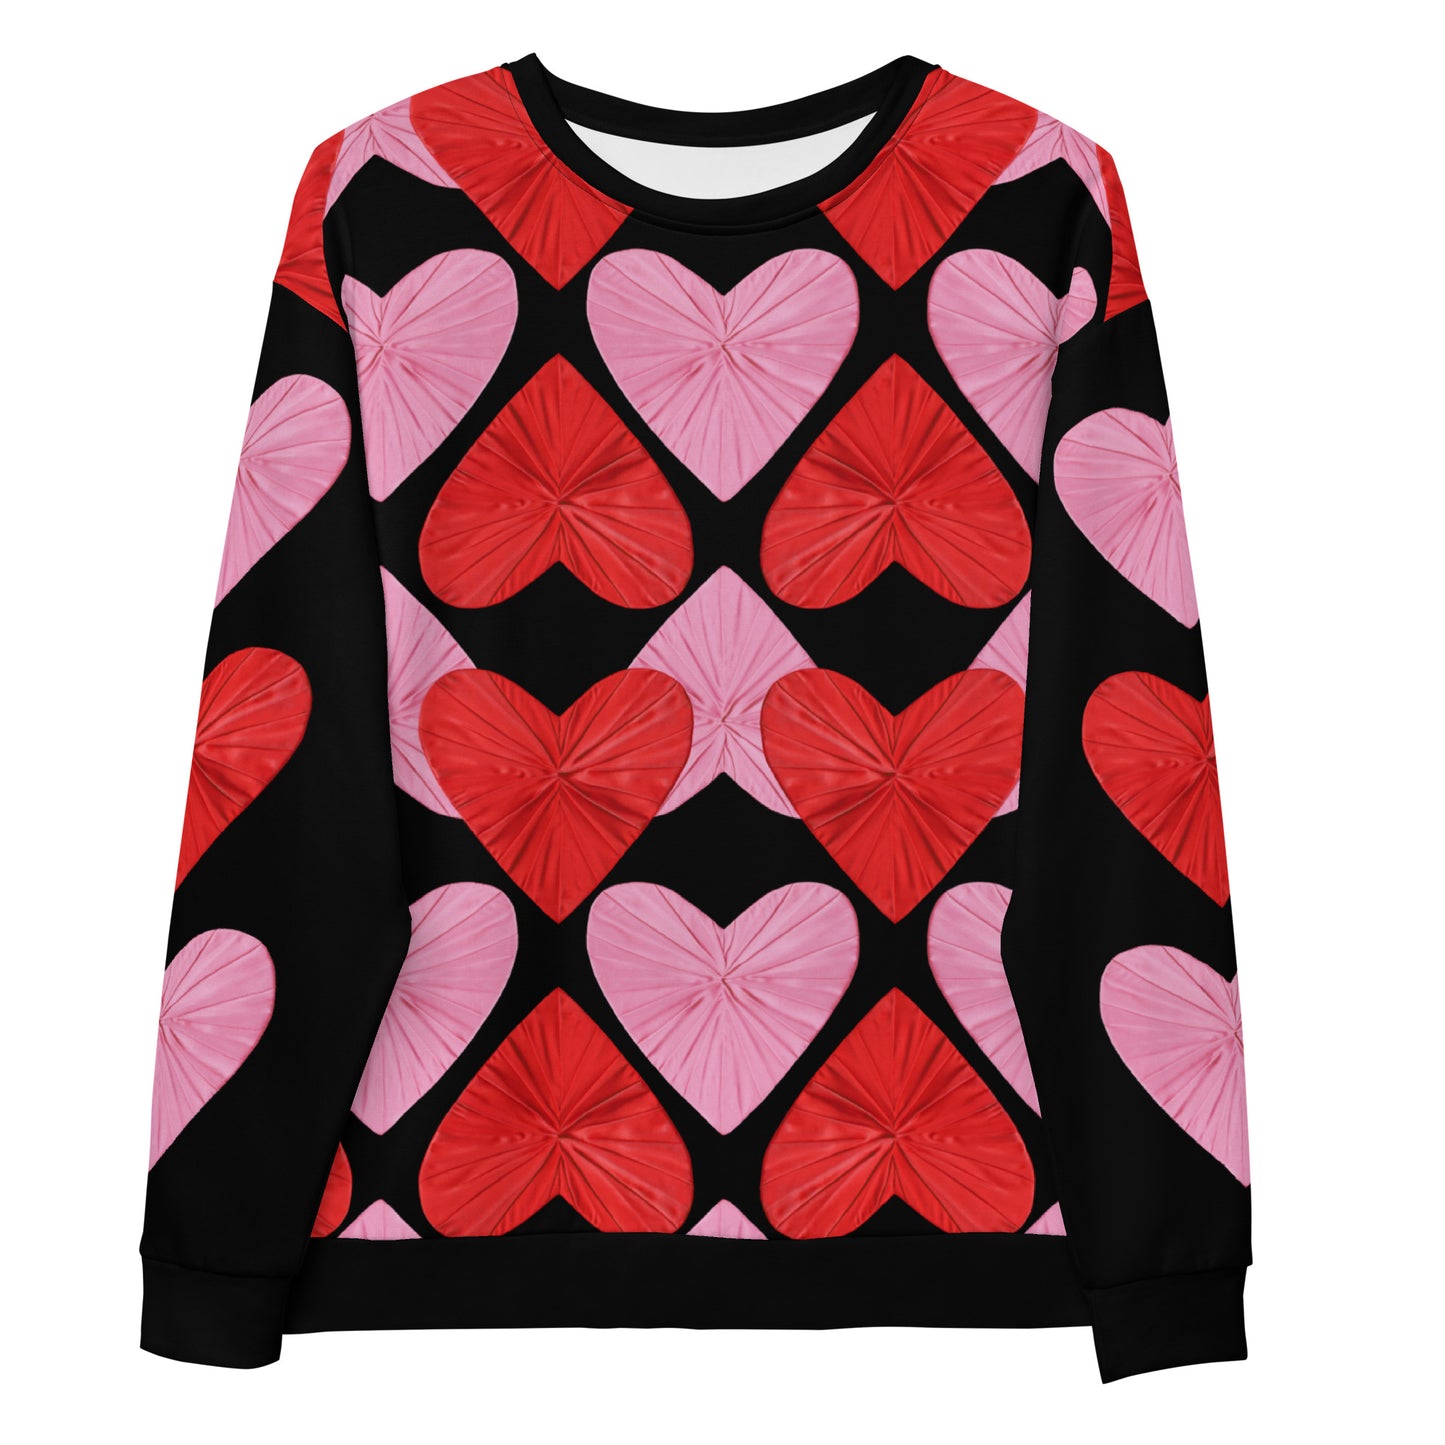 Self-Love Hearts All Over Print Sweatshirt